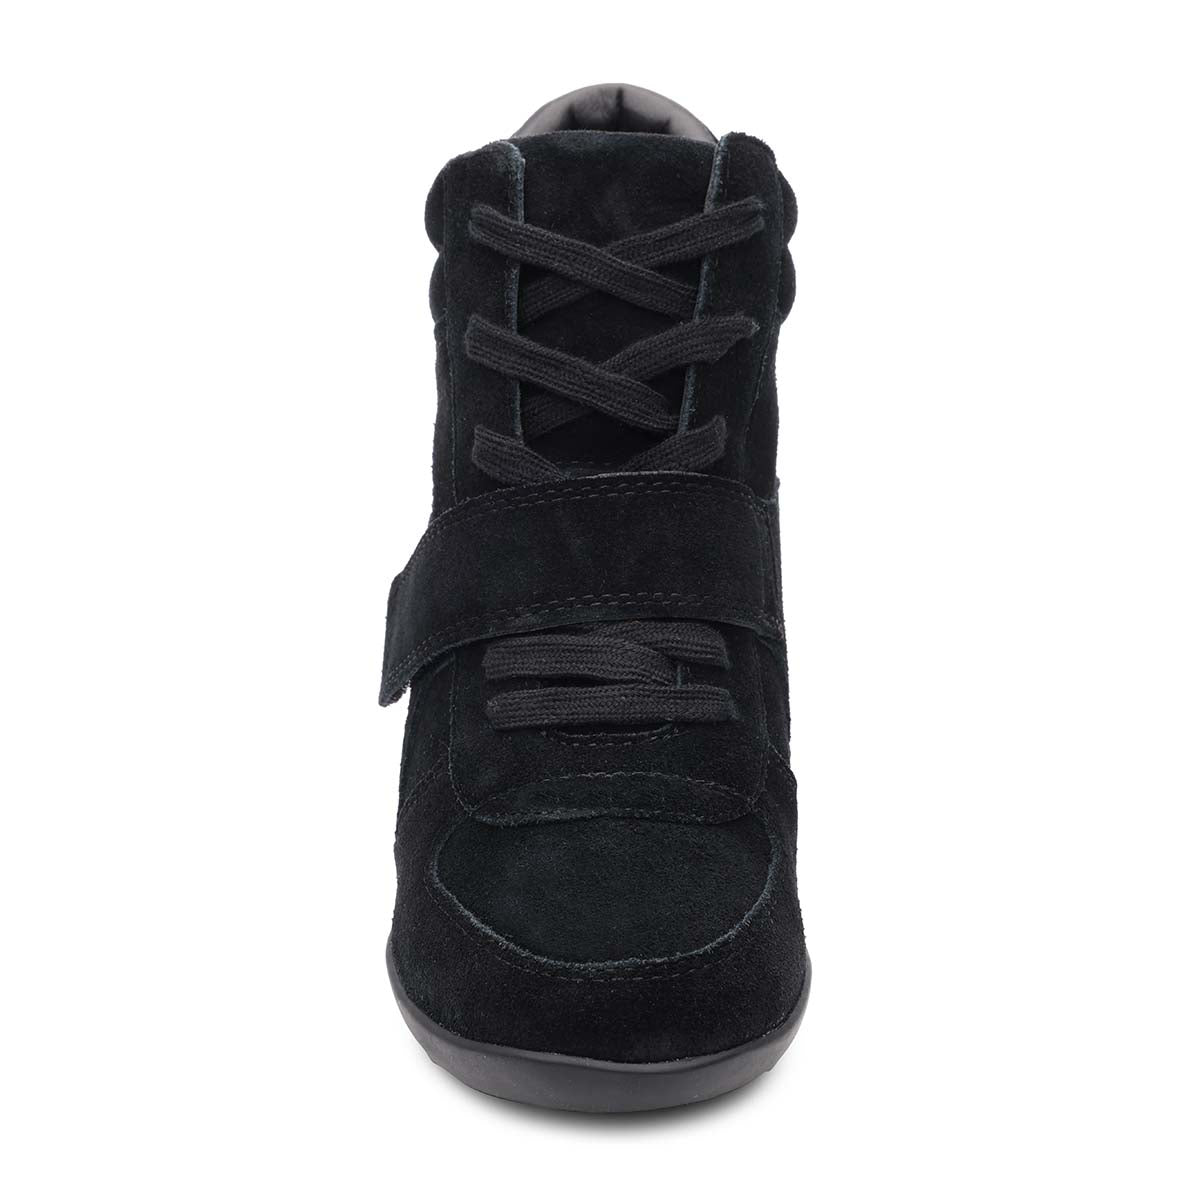 Aldo Black Wedge Sneakers for Women : Amazon.in: Fashion